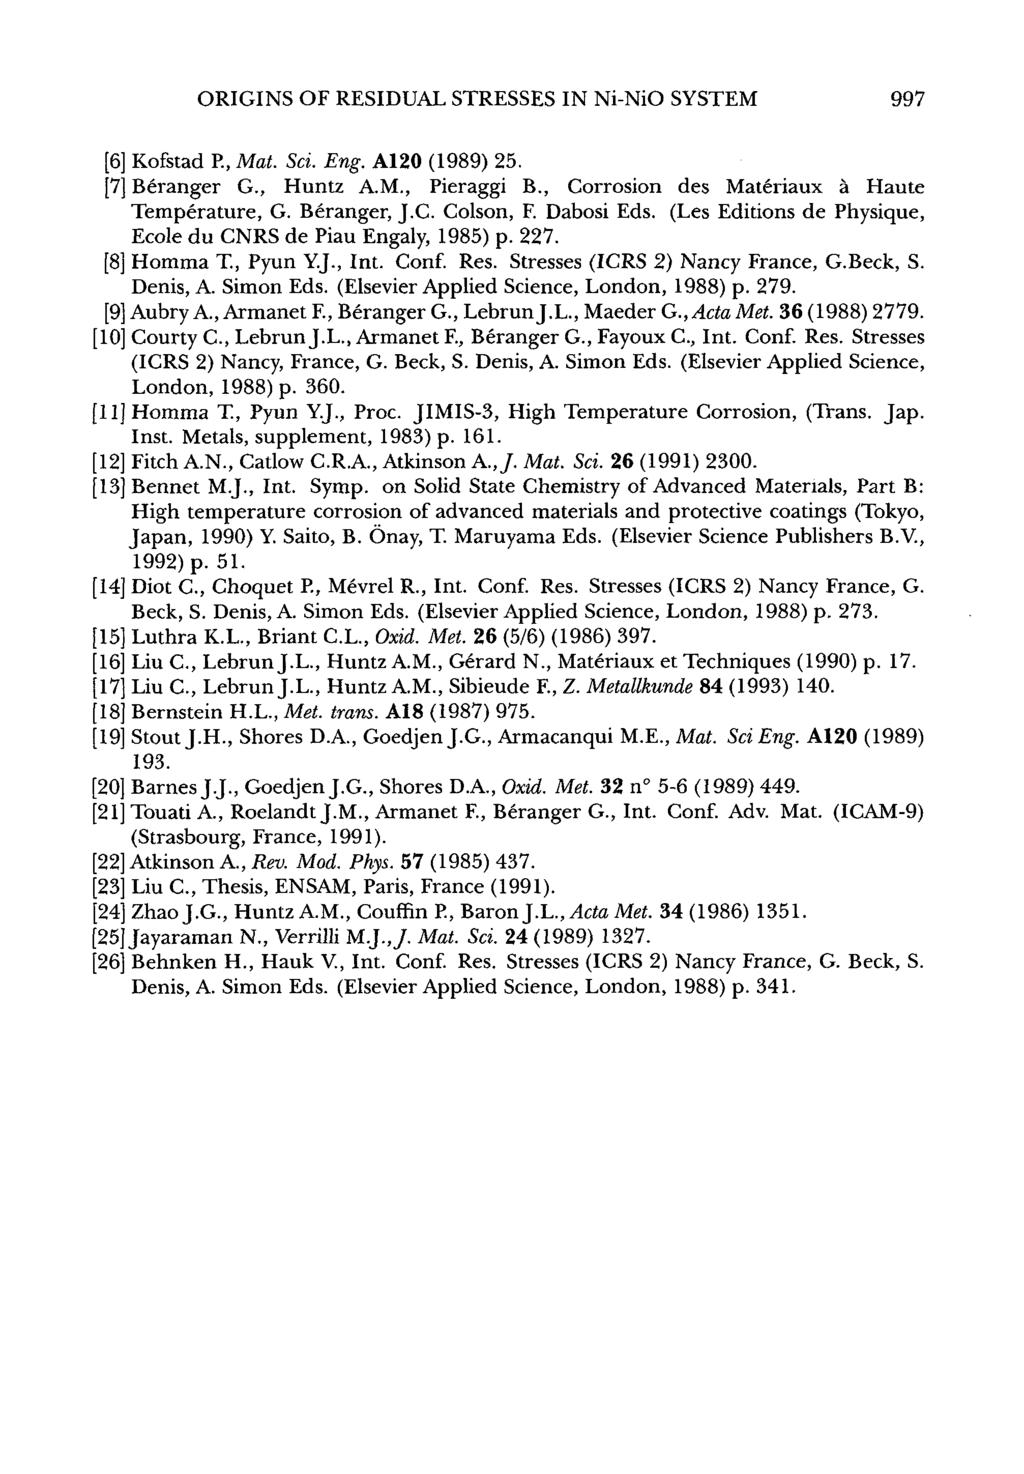 ORIGINS OF RESIDUAL STRESSES IN Ni-NiO SYSTEM 997 [6] Kofstad F!, Mat. Sci. Eng. A120 (1989) 25. [7] BCranger G., Huntz A.M., Pieraggi B., Corrosion des Materiaux B Haute Temperature, G. Btranger, J.